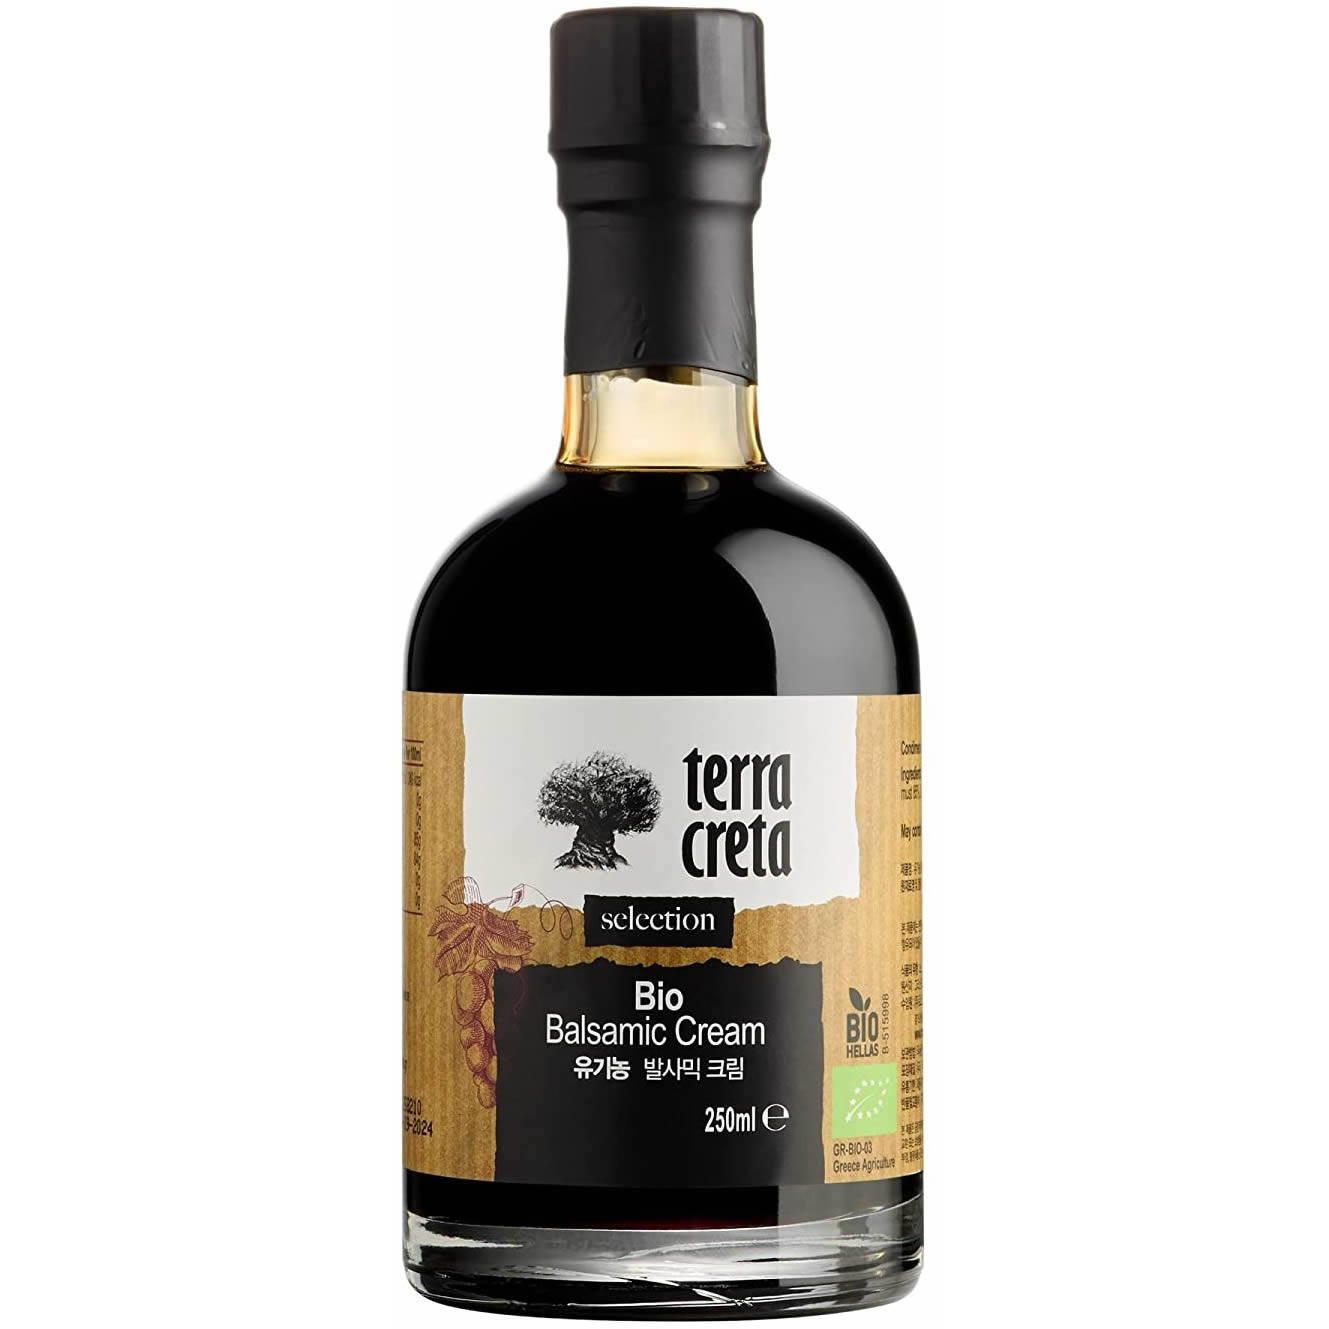 Terra Creta - Balsamico Creme BIO 250 ml